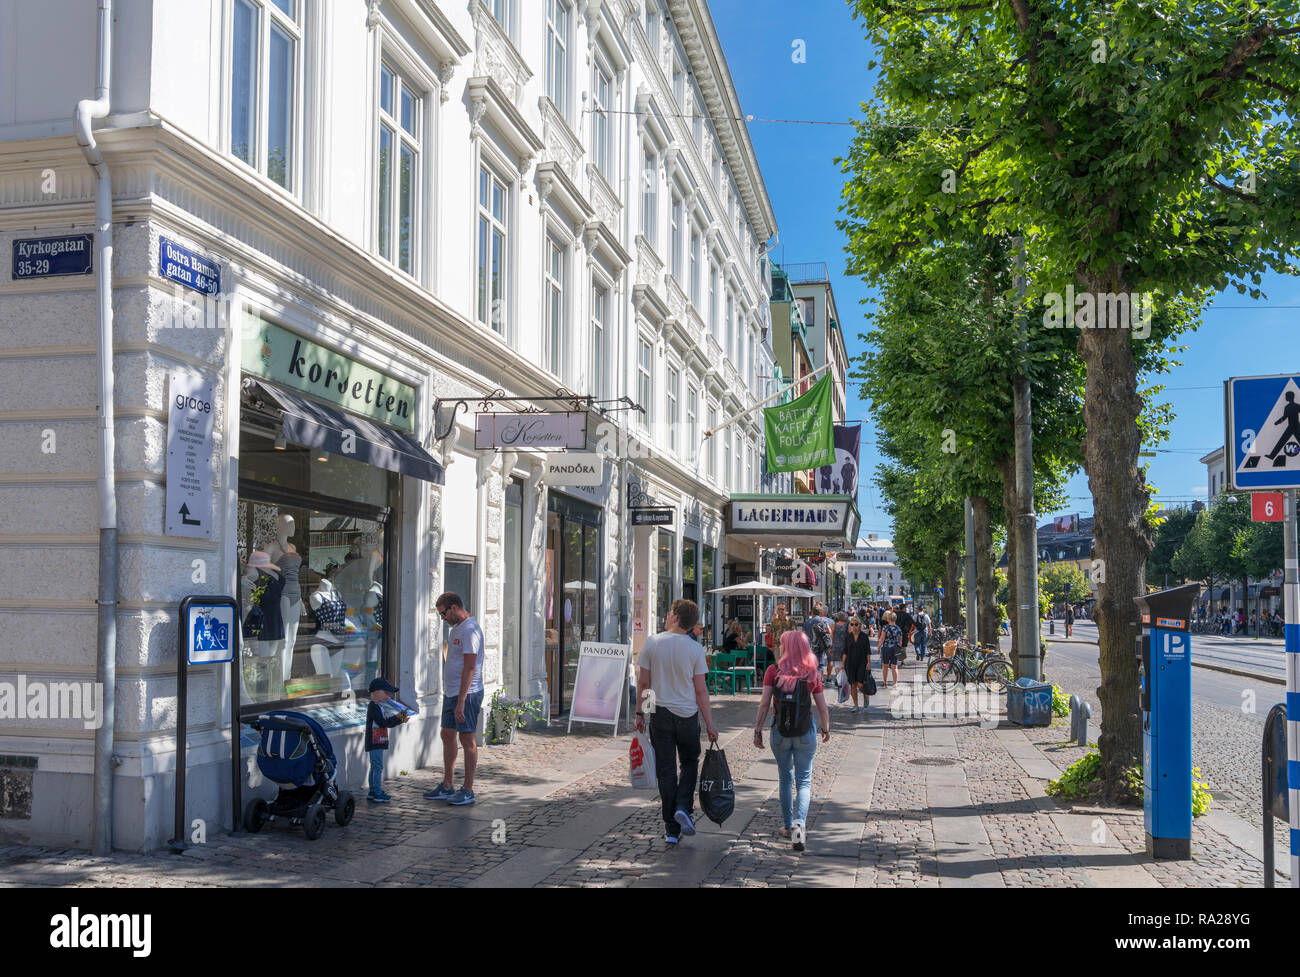 Shops and stores on Östra Hamngatan in the city centre, Gothenburg (Göteborg), Sweden Stock Photo